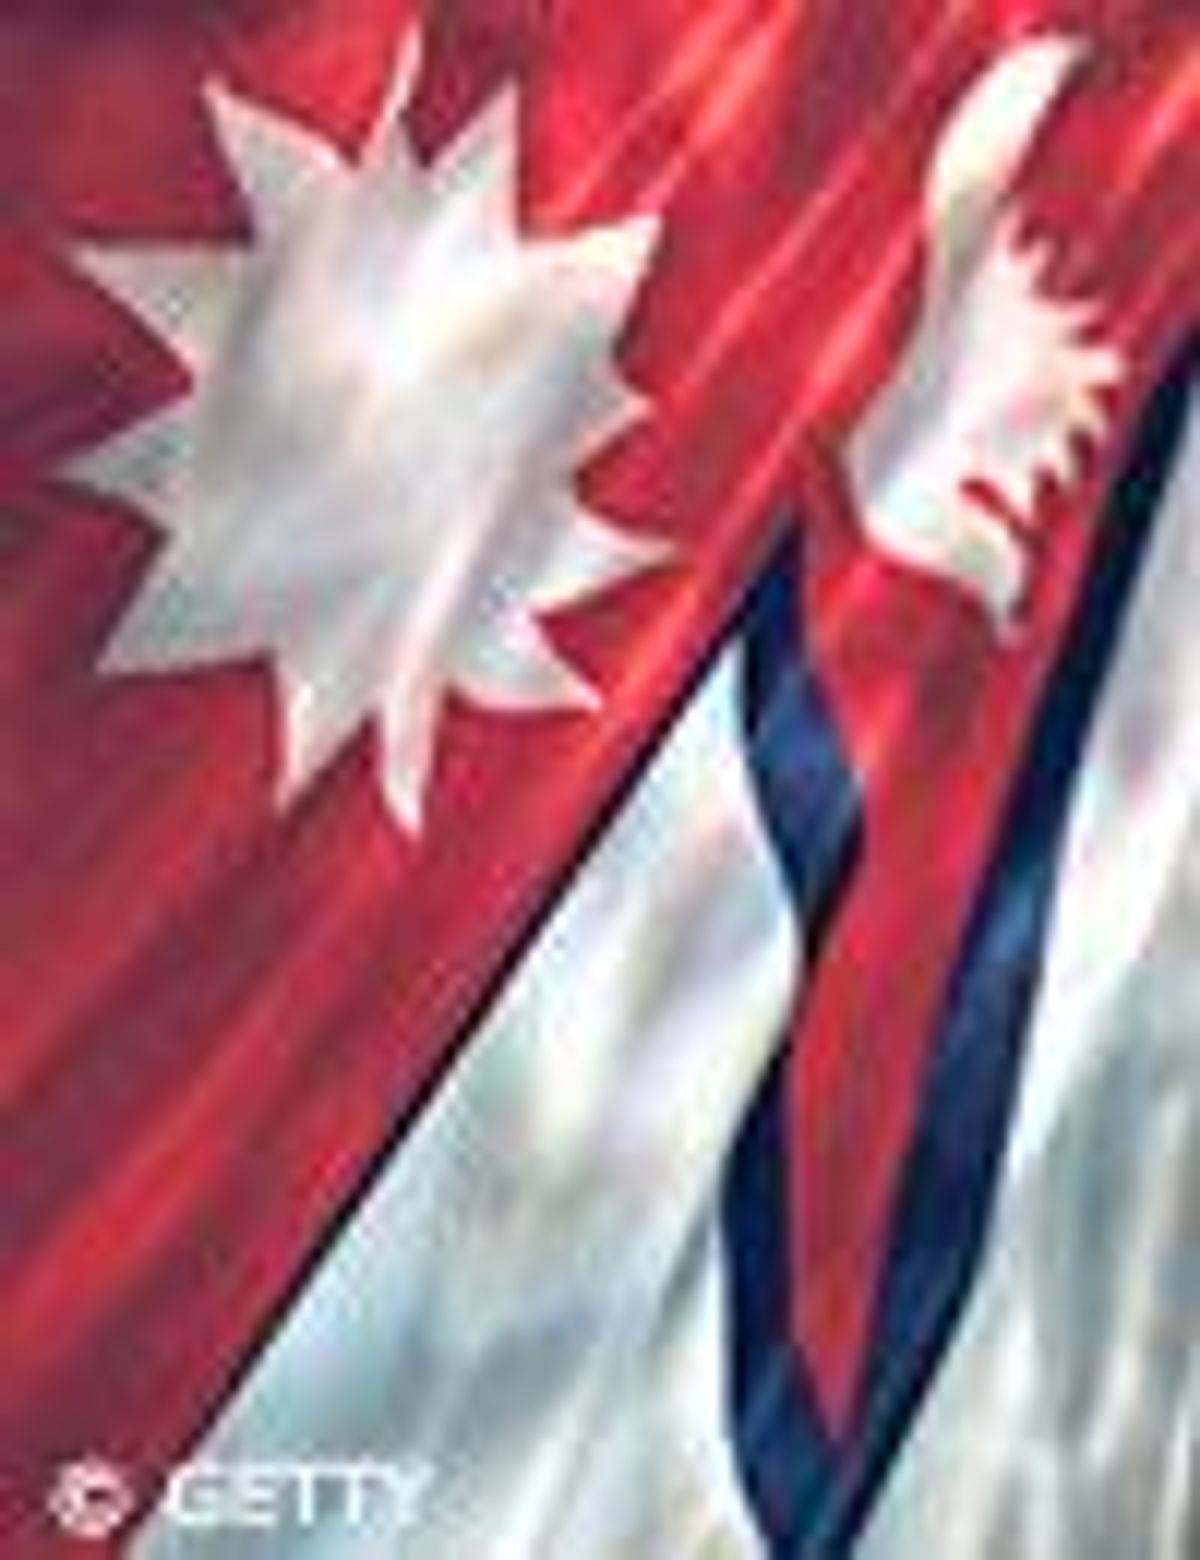 Nepal_flag